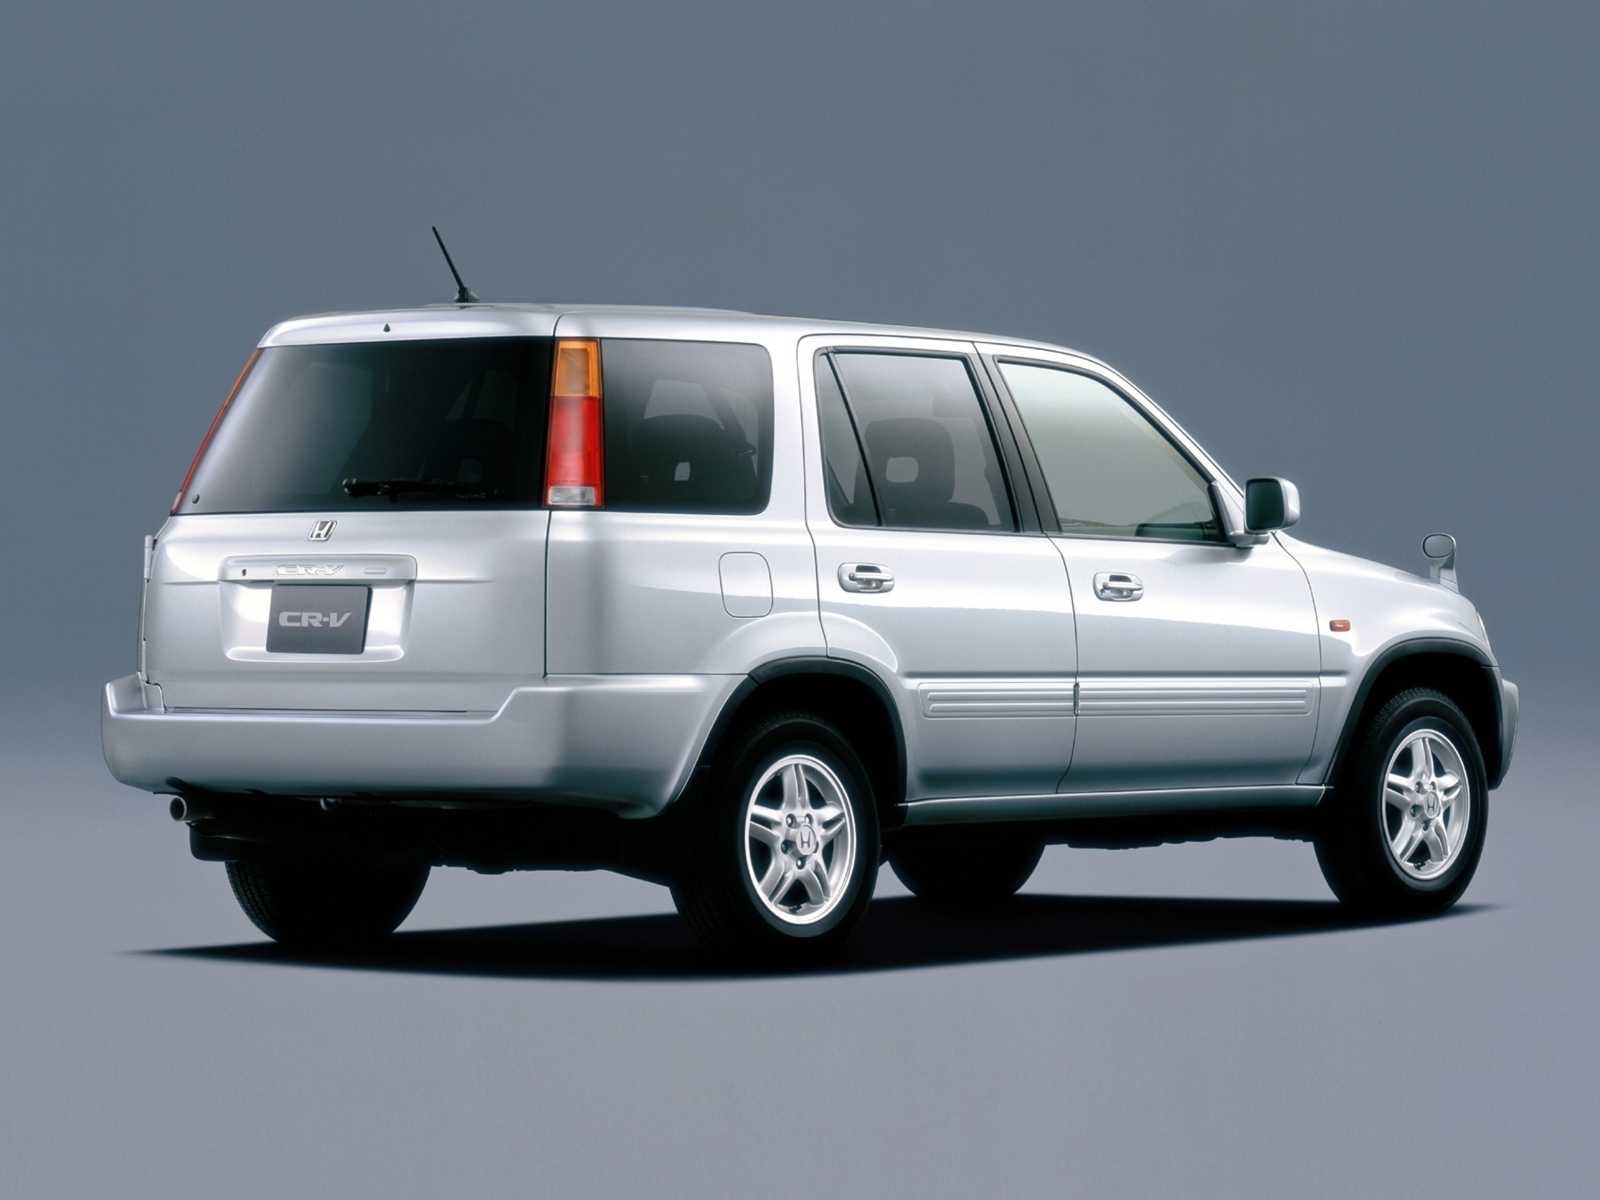 Хонда црв 2001 год. Хонда CRV Rd 1 поколение. Honda CR-V rd1 1999. Хонда СРВ 1 поколения. Honda CR-V rd1 2001.